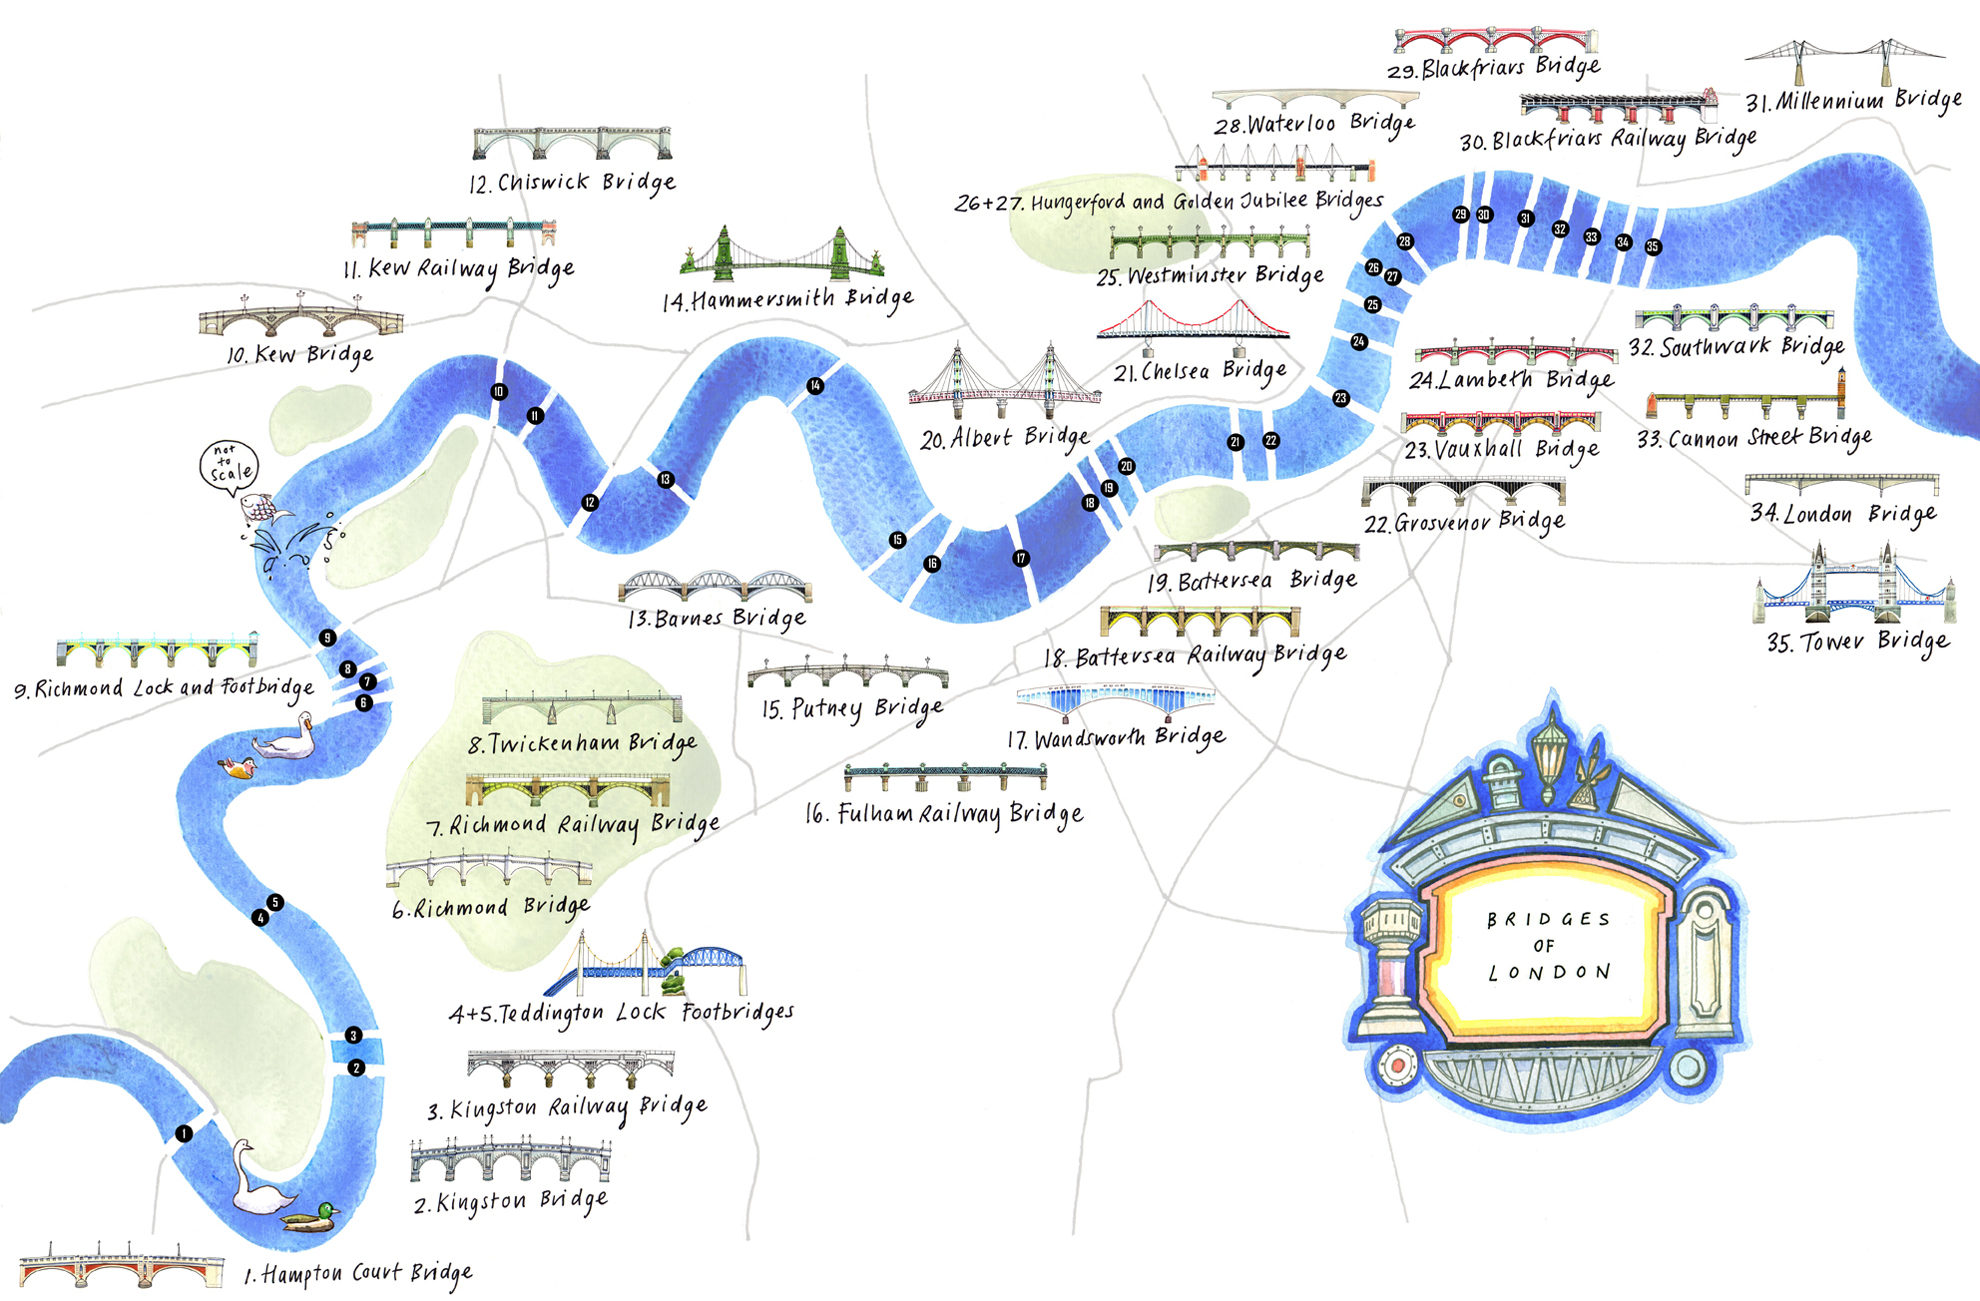 Bridges of London illustration by Lis Watkins